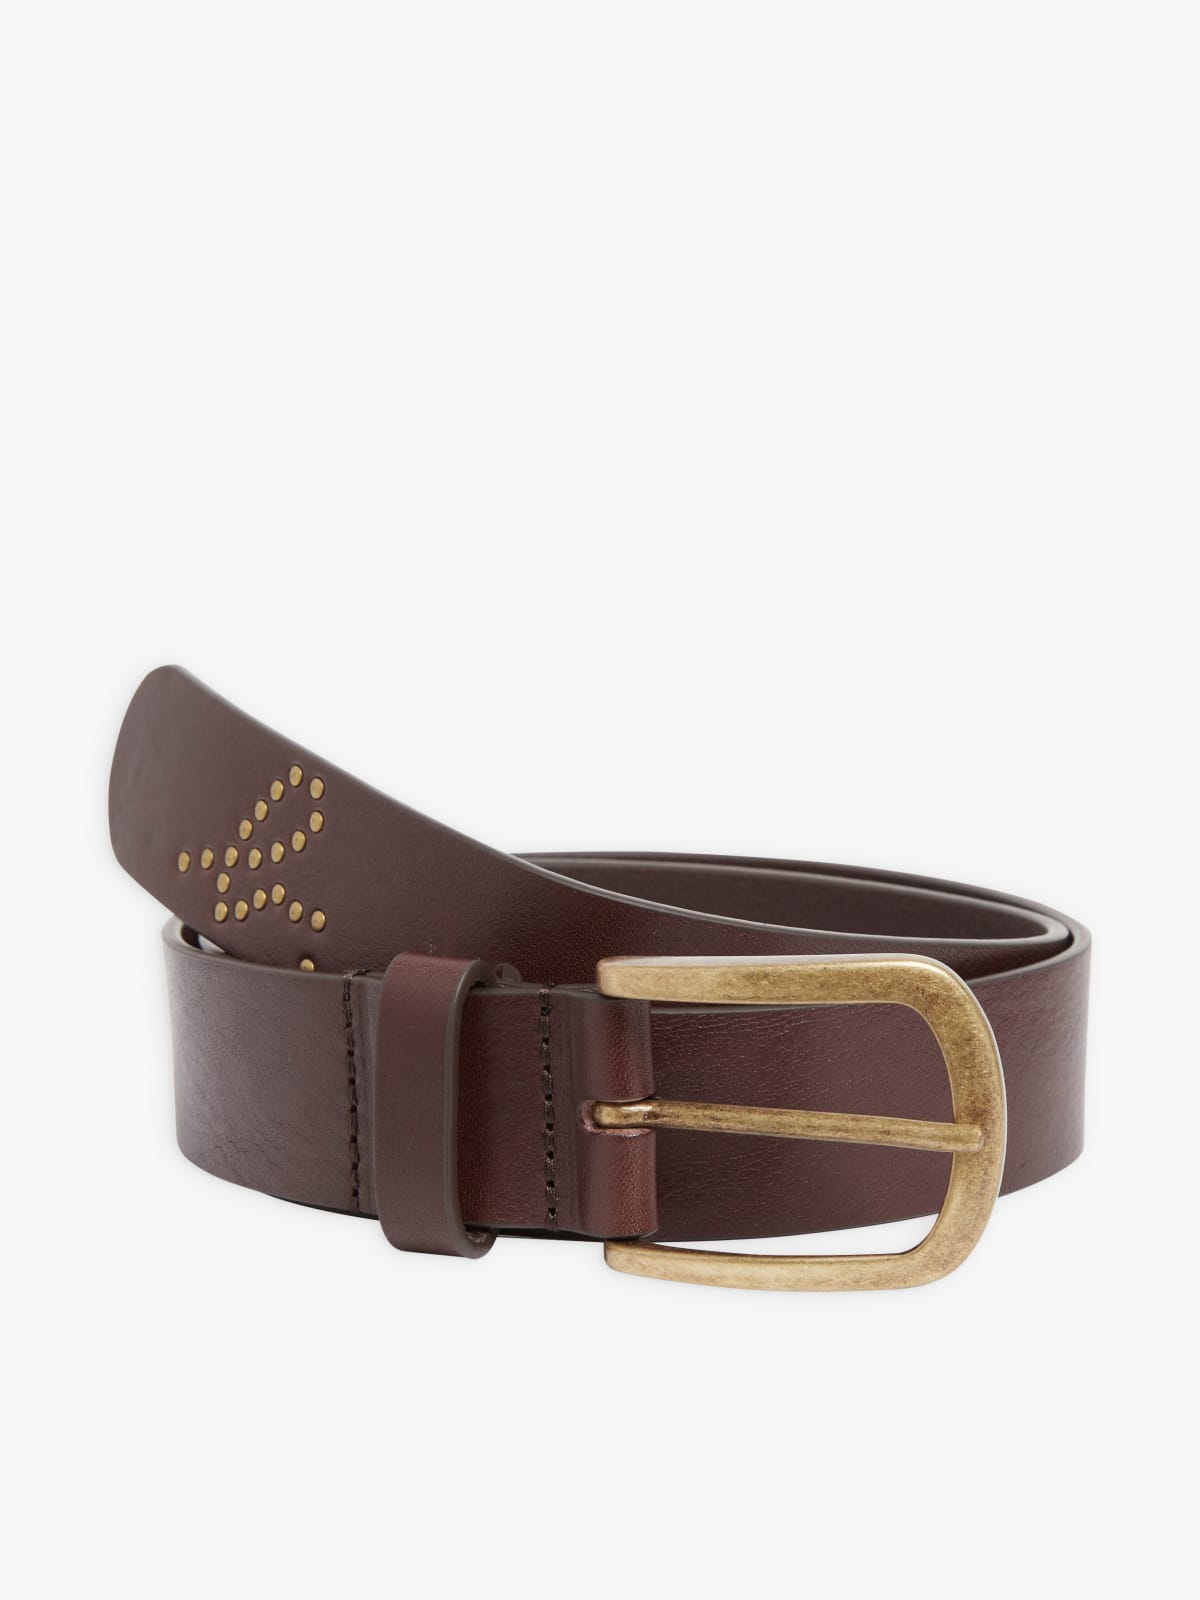 brown leather B belt